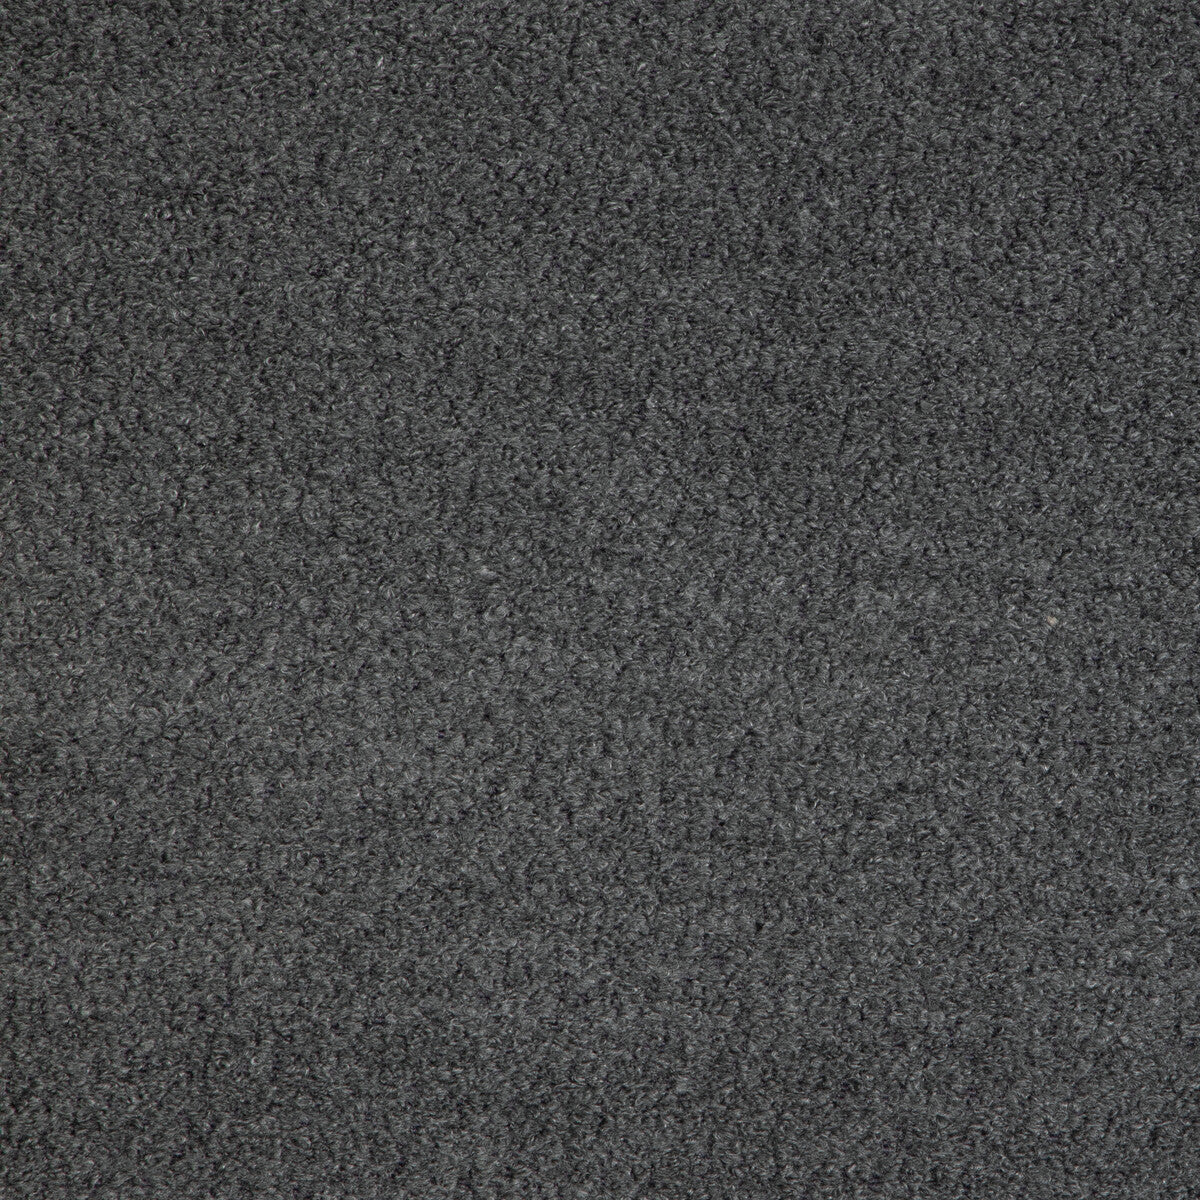 Kravet Smart fabric in 37011-21 color - pattern 37011.21.0 - by Kravet Smart